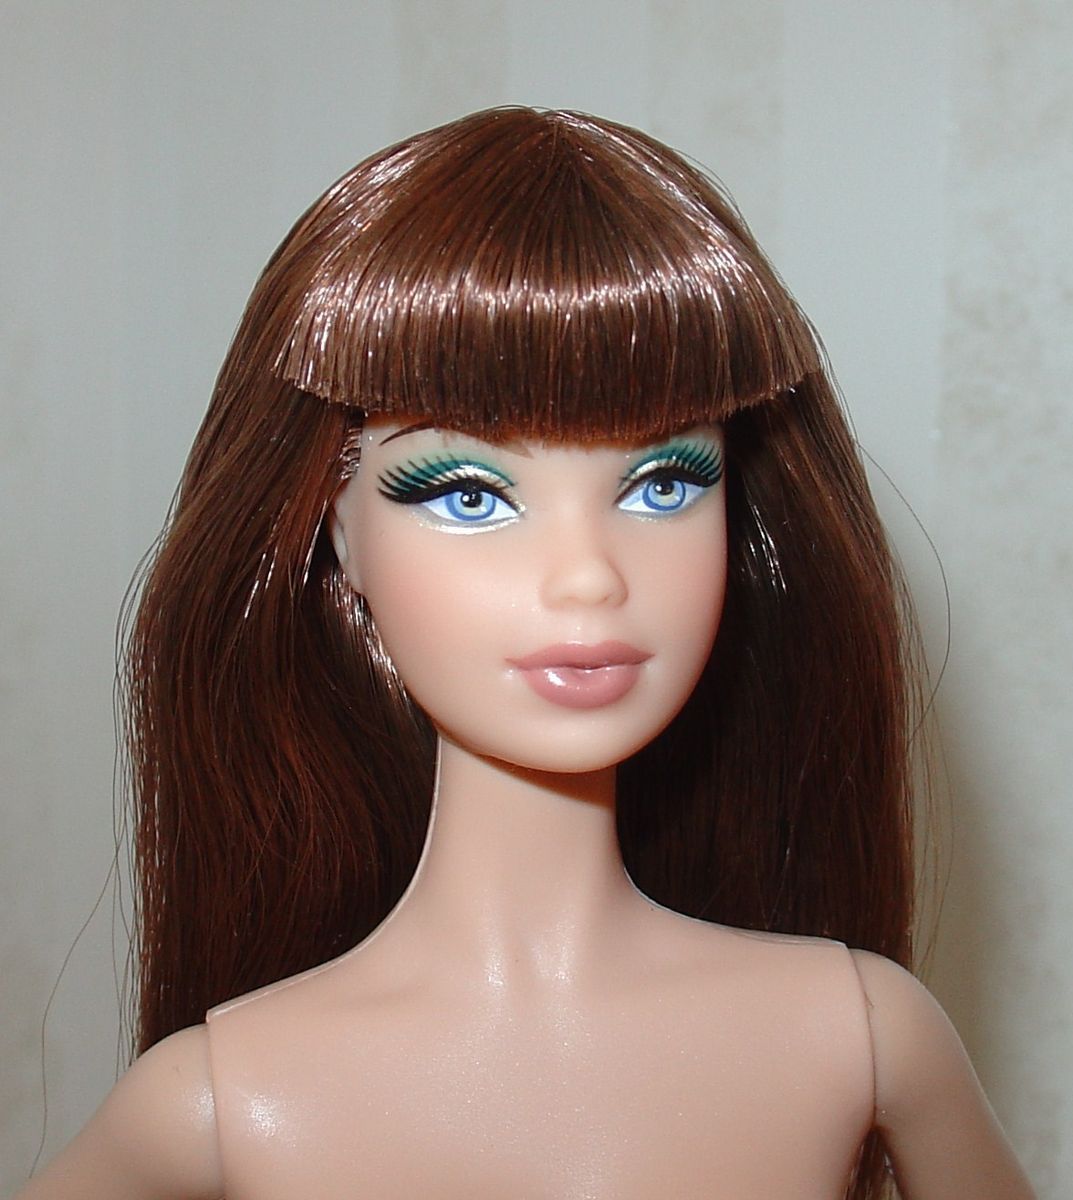  BASICS/MODEL MUSE long brunette hair, girl next door look, very sweet